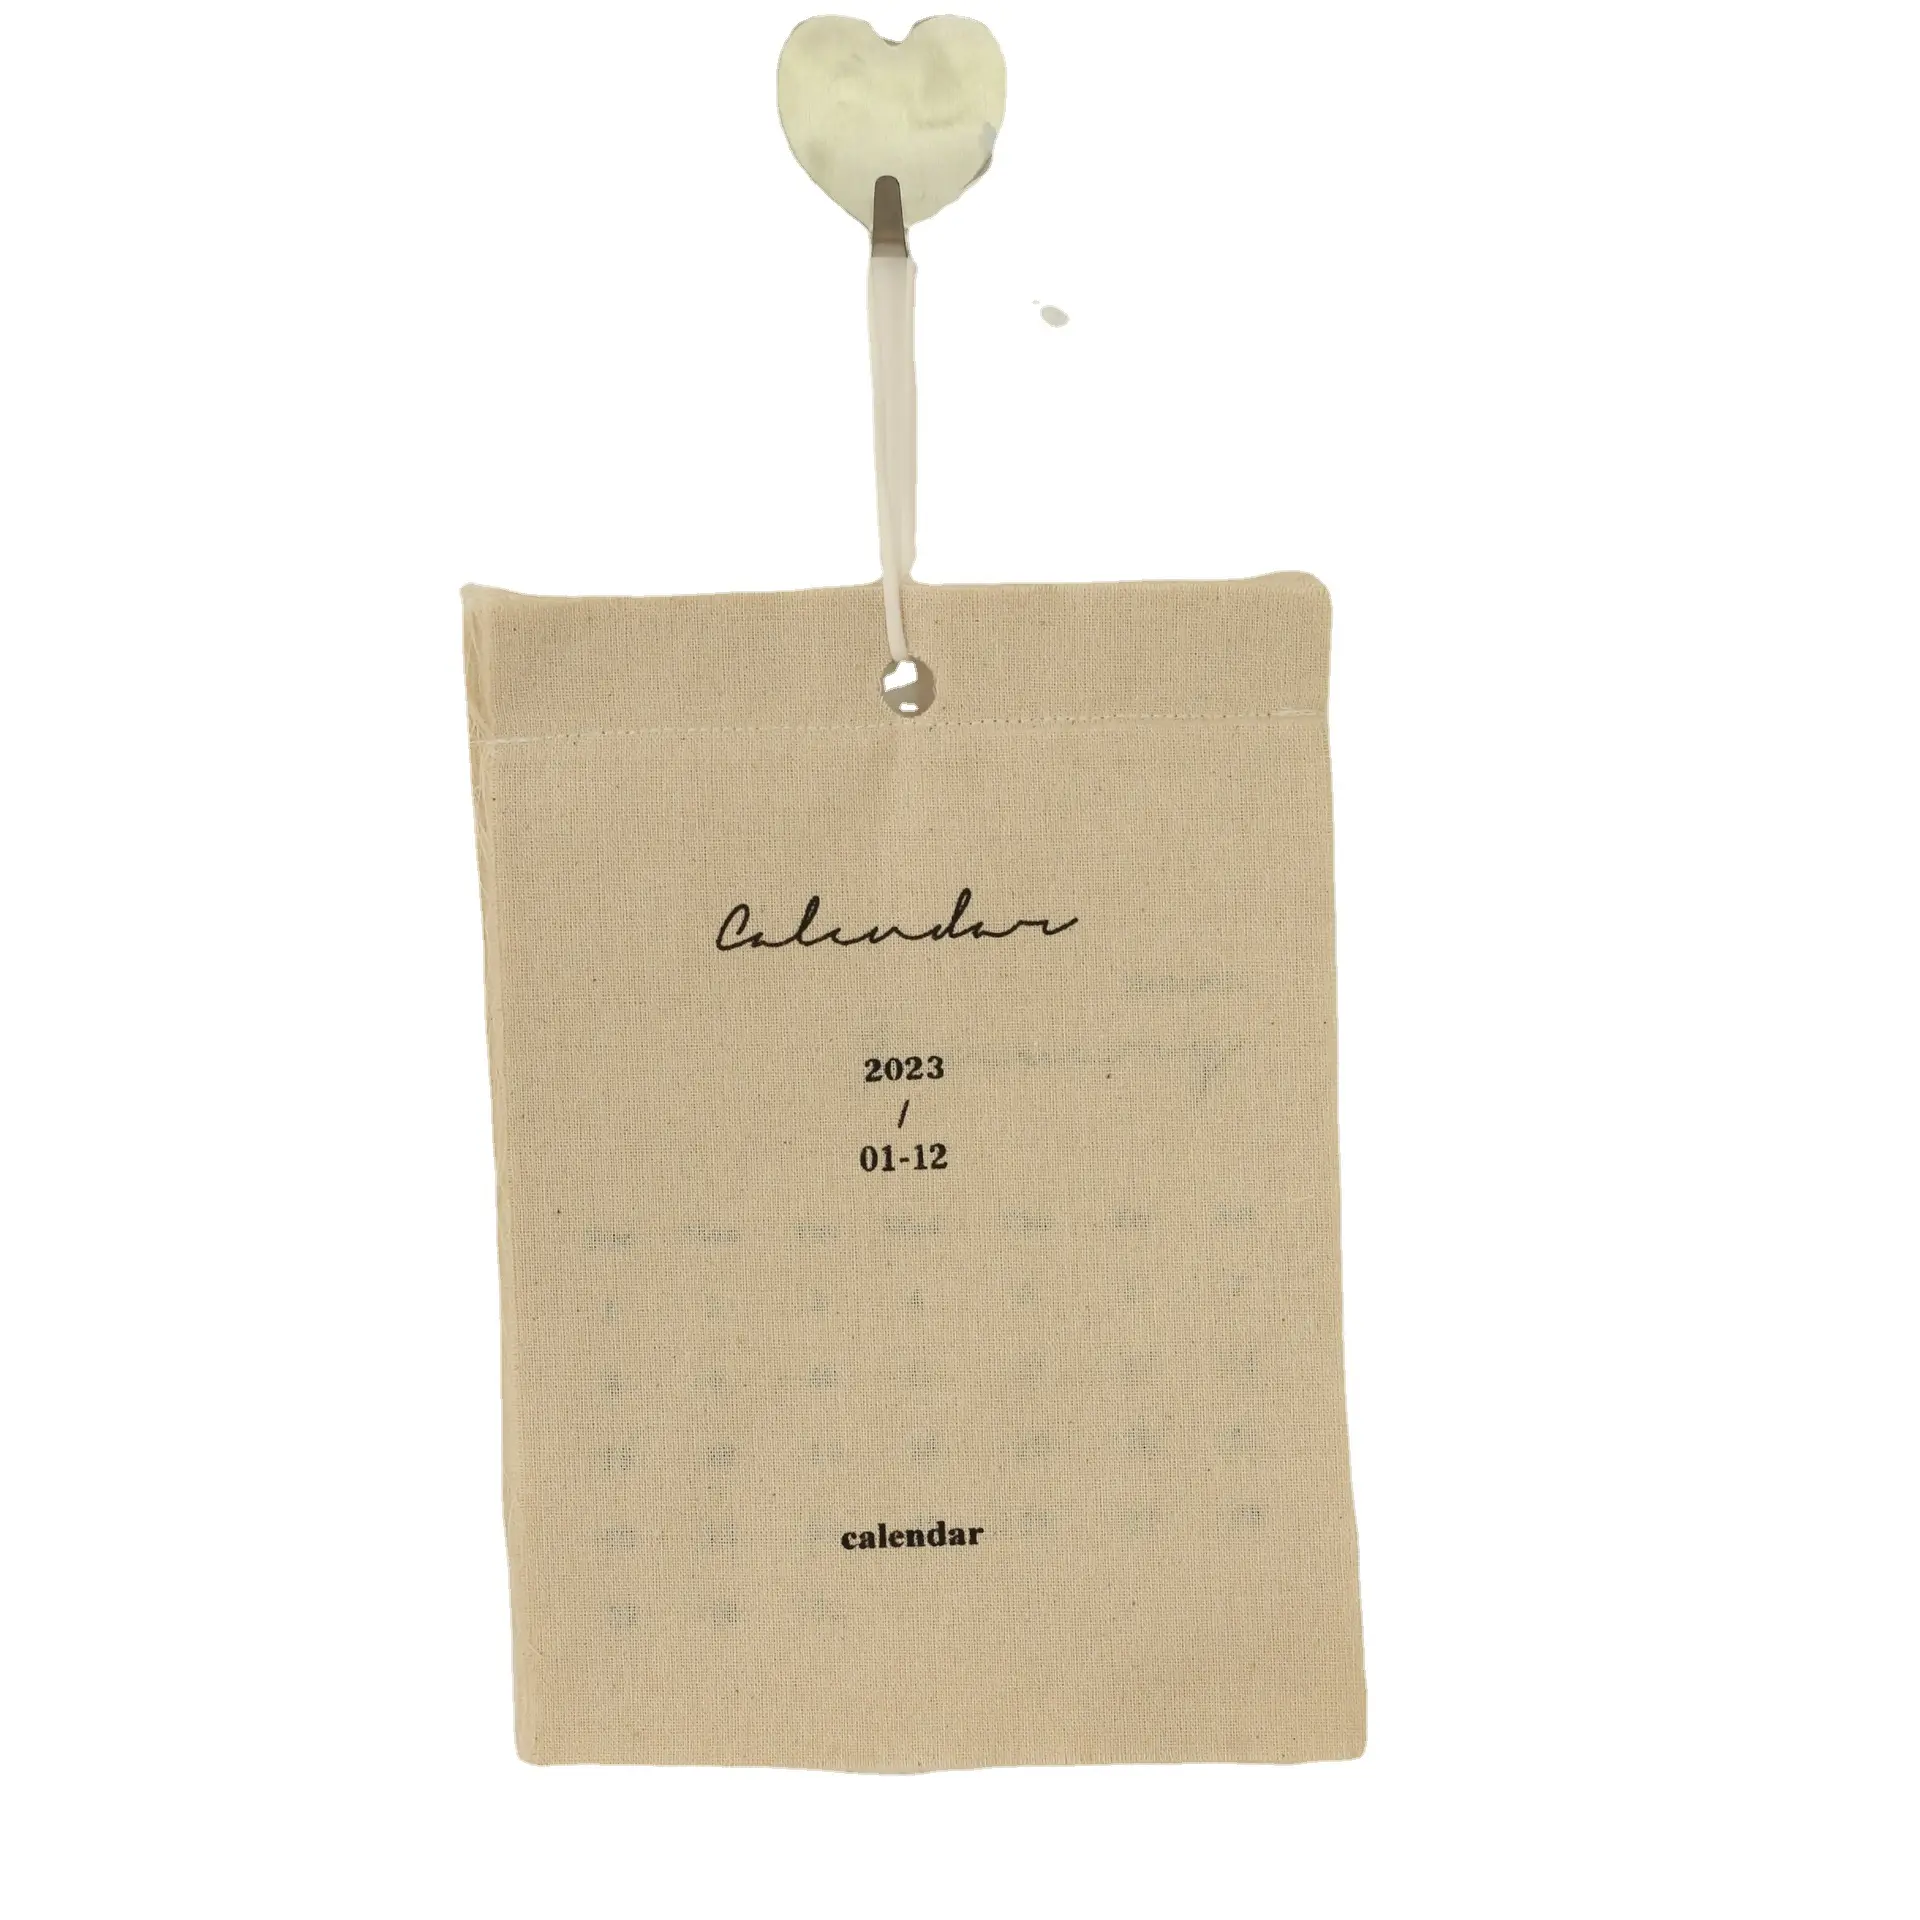 Calendrier Simple 2023 coton calendrier en lin et coton imprimé en anglais